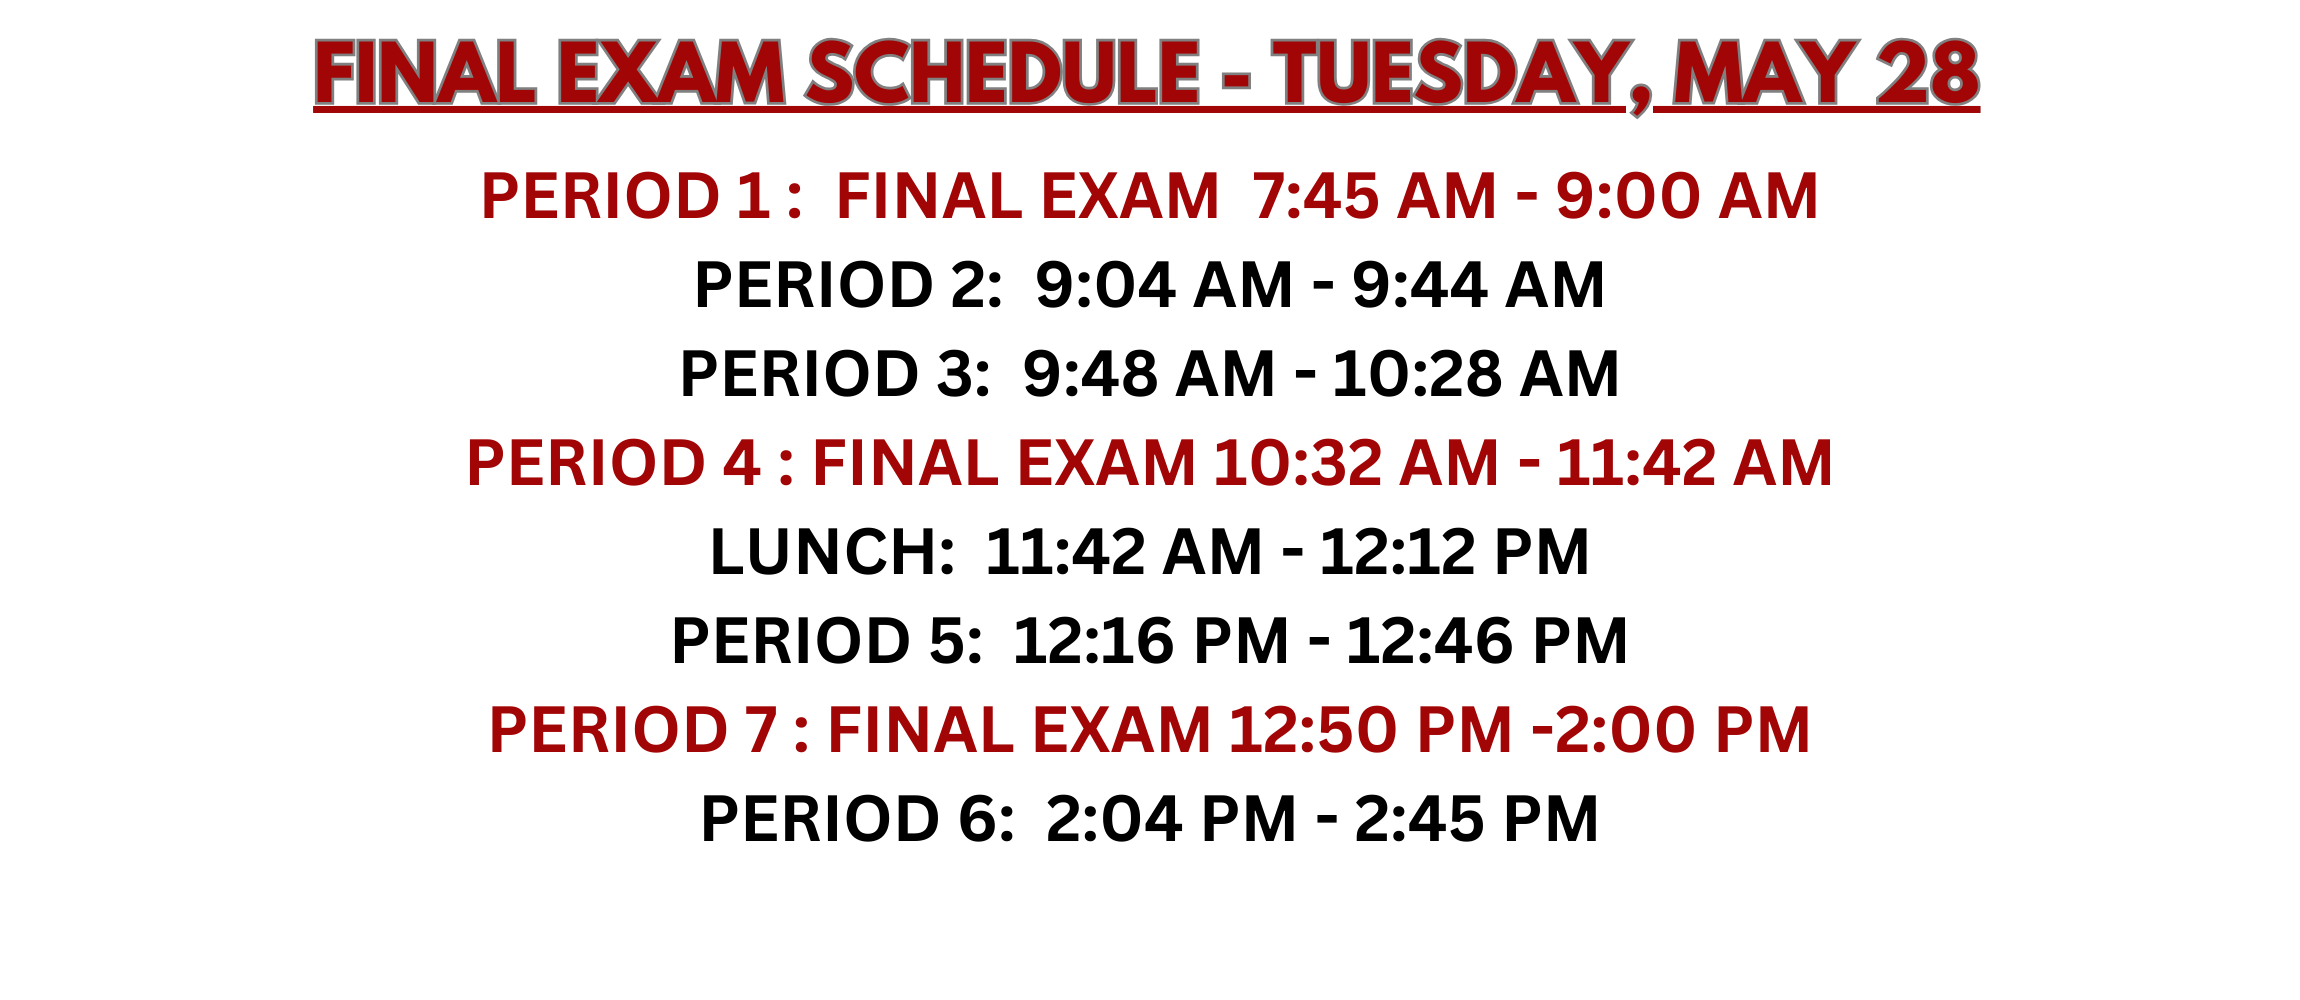 Tuesday Final Exam Schedule